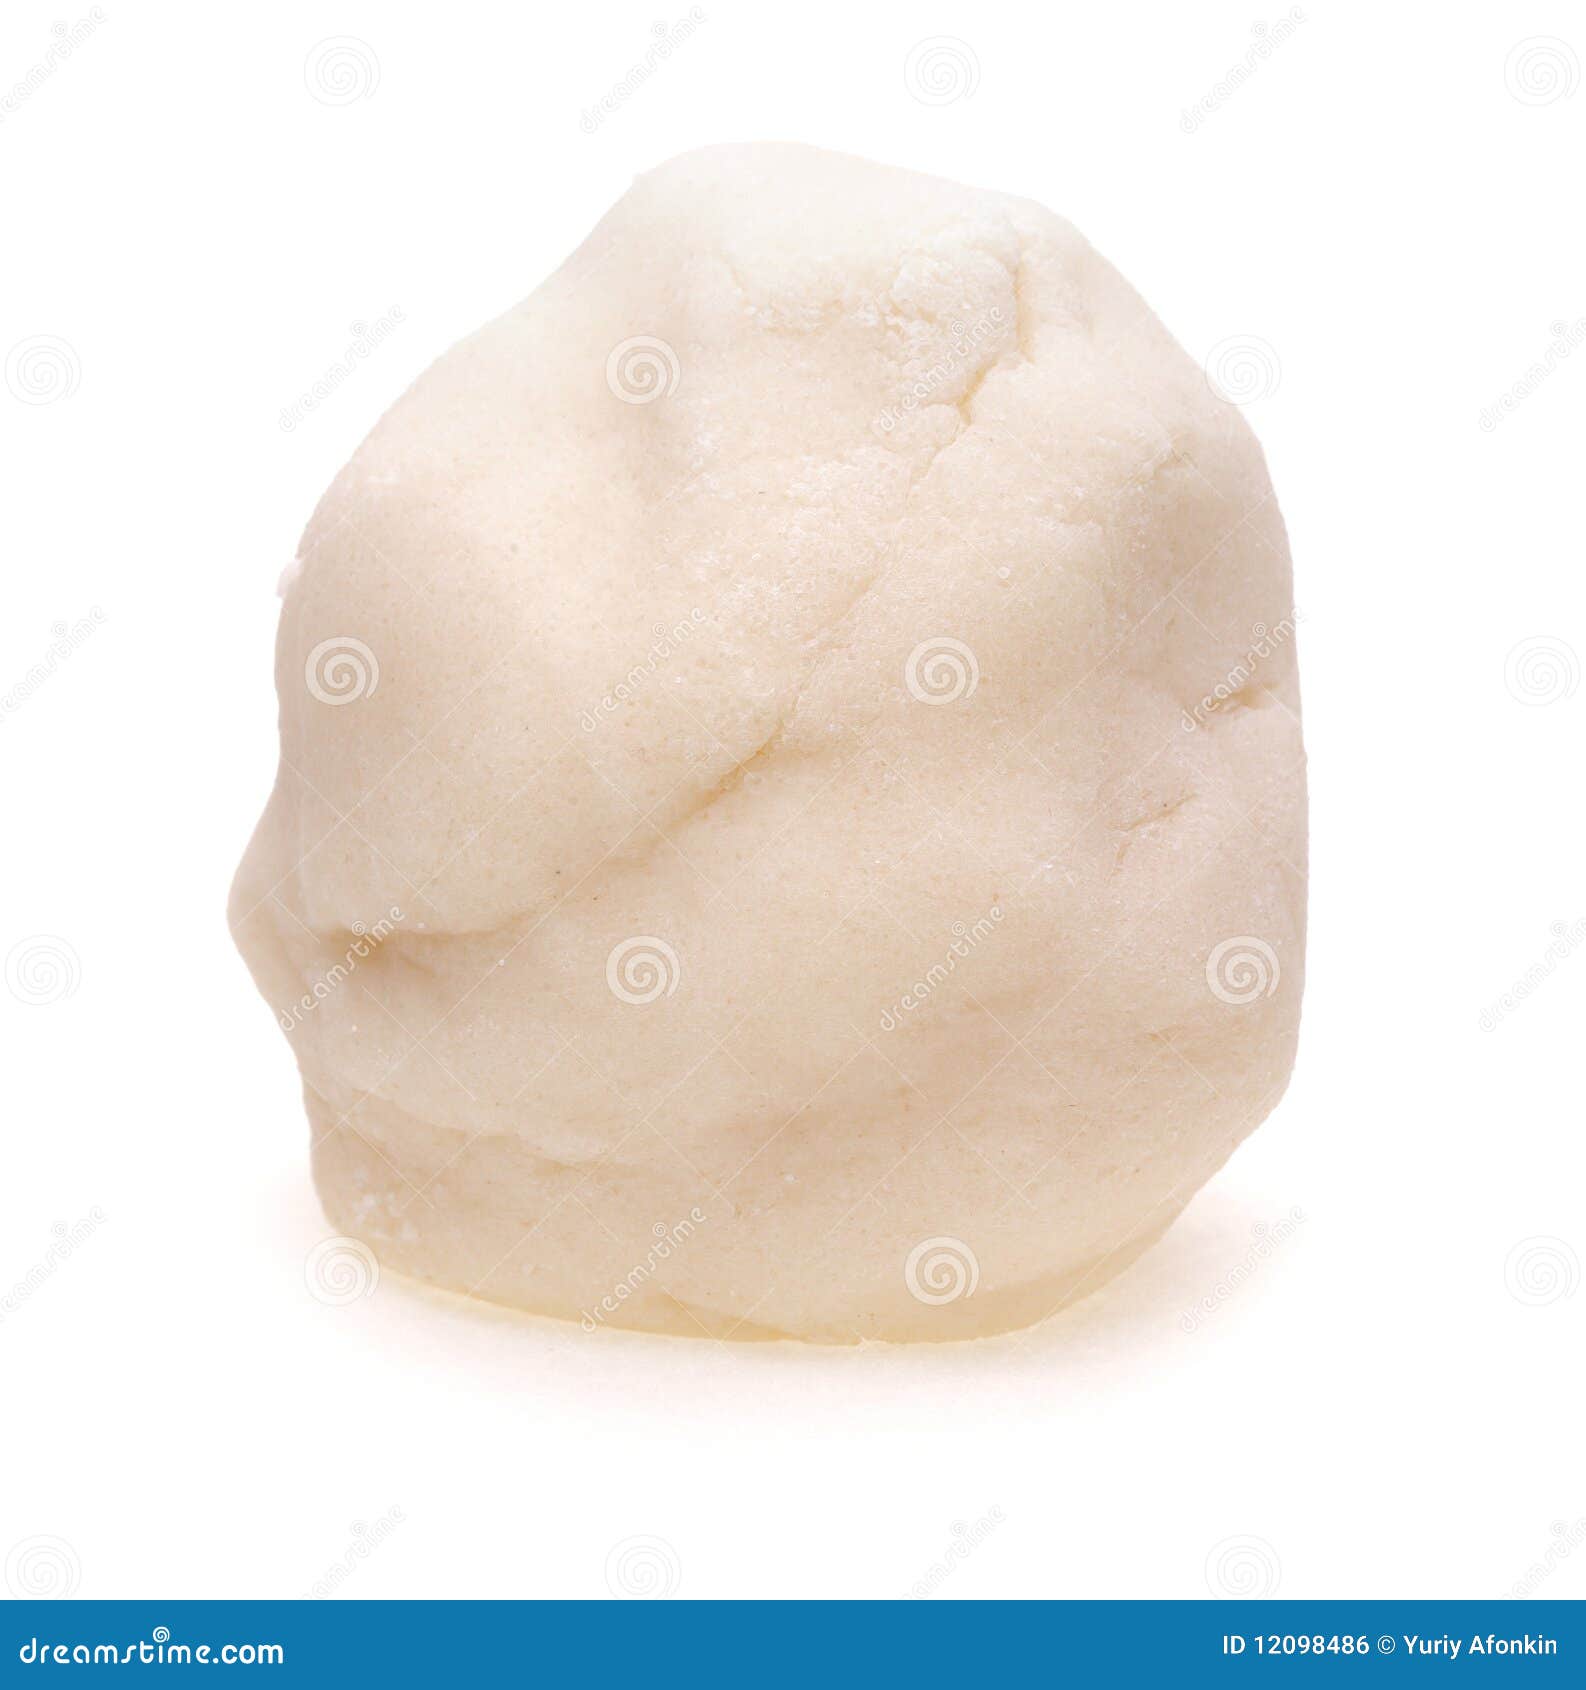 lump of salted dough